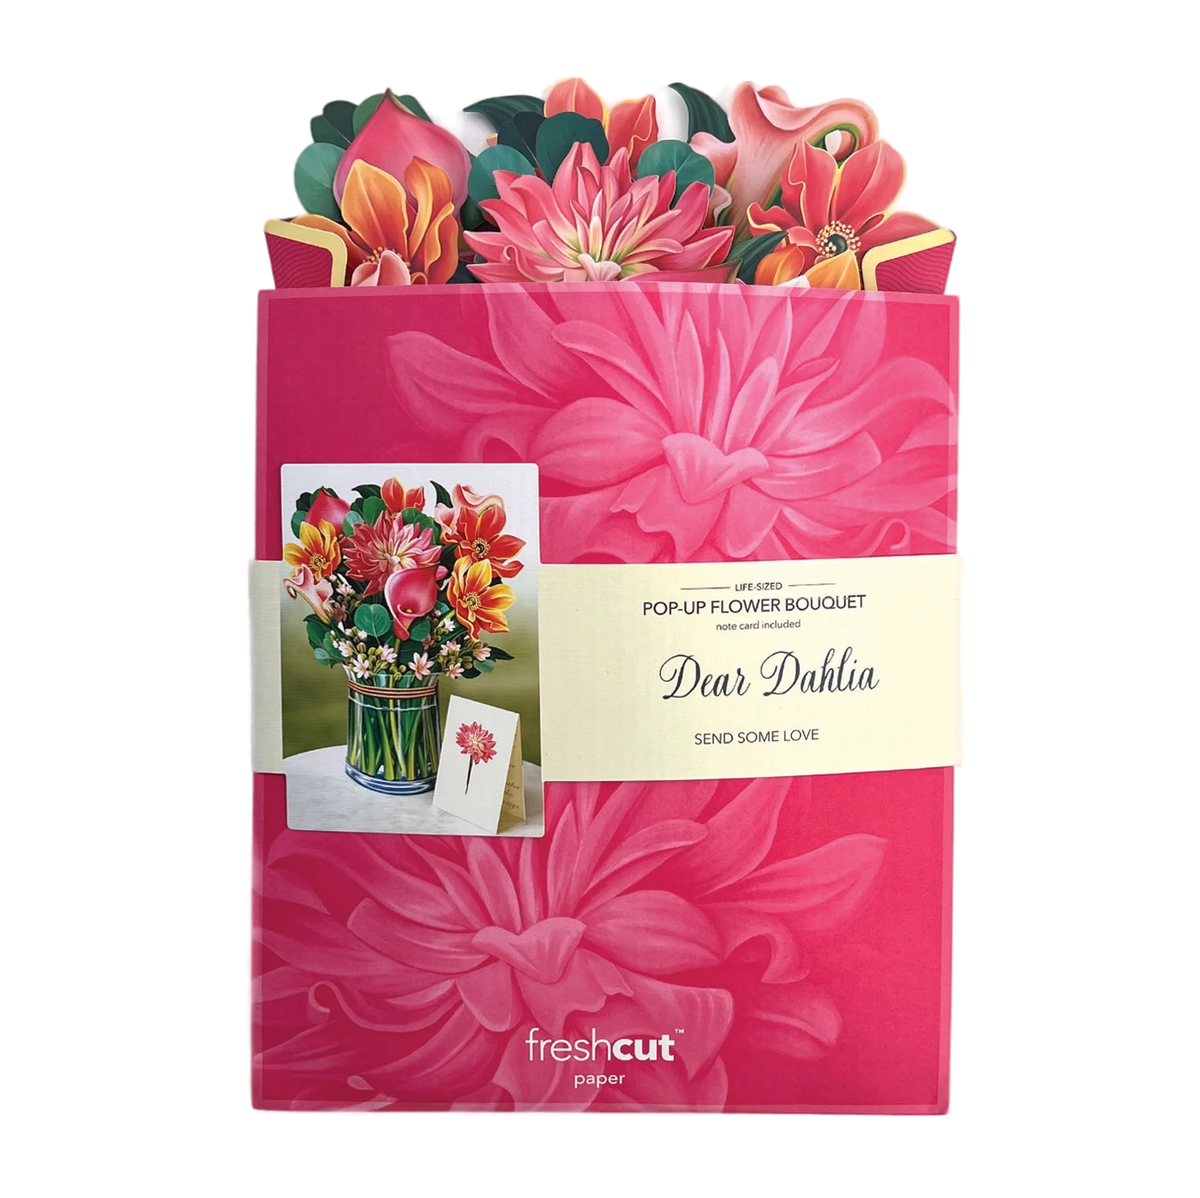 Dear Dahlia Freshcut Paper Bouquet